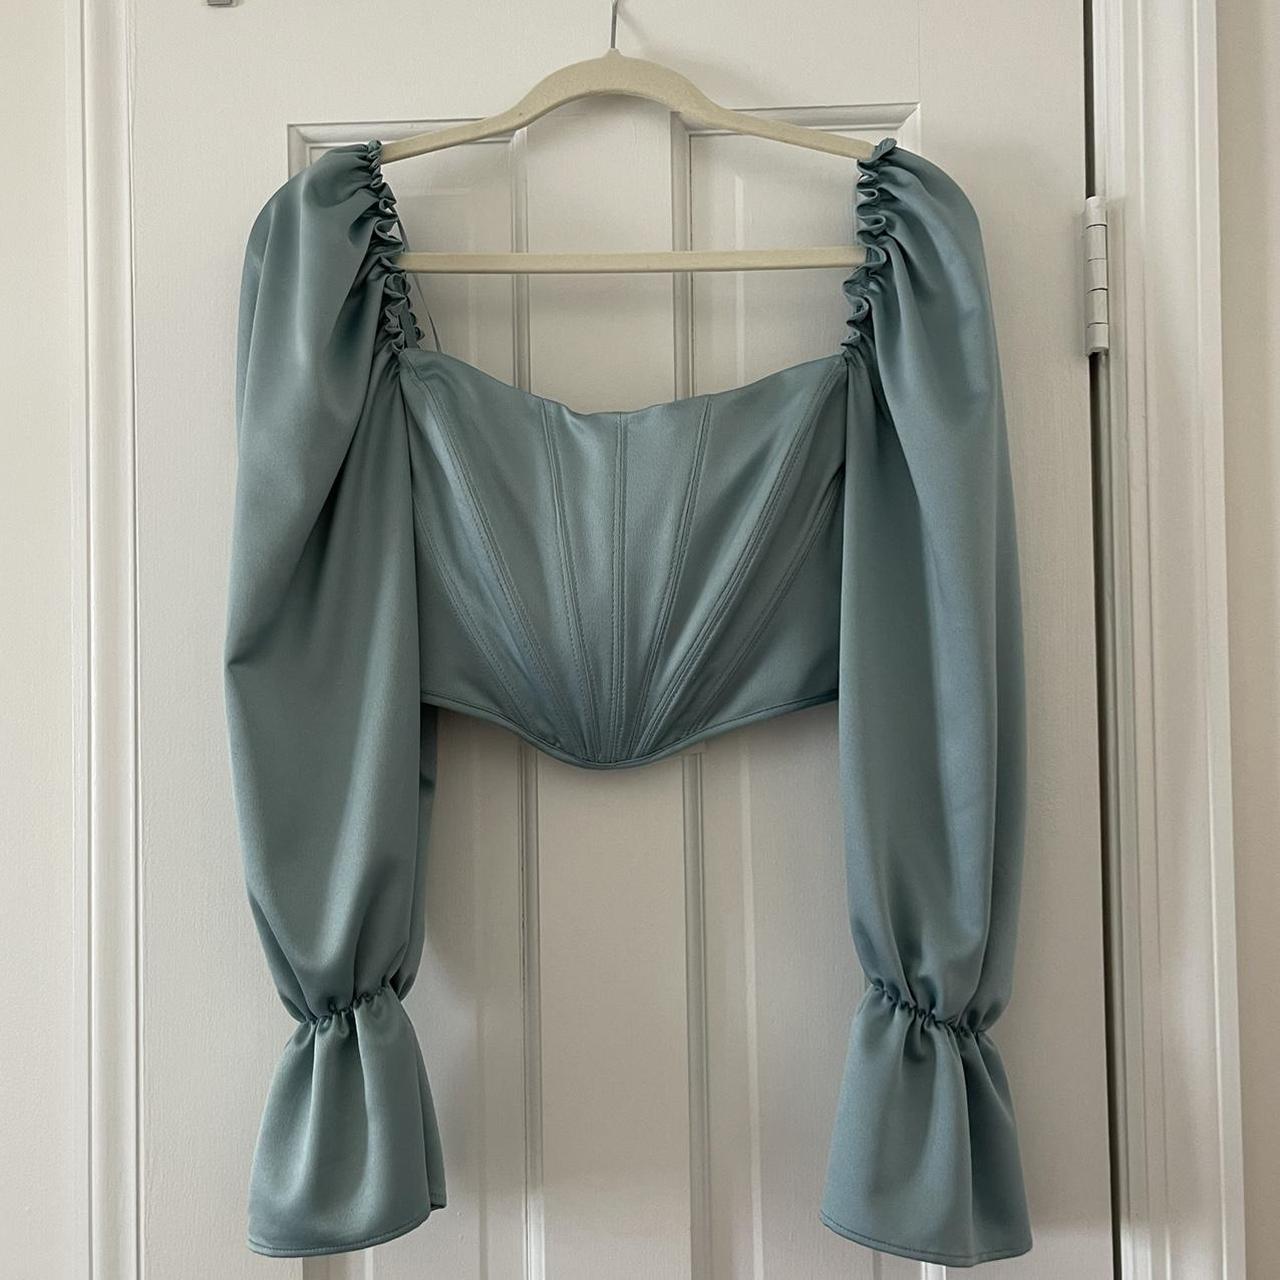 Zara Women's Blue and Green Corset (2)